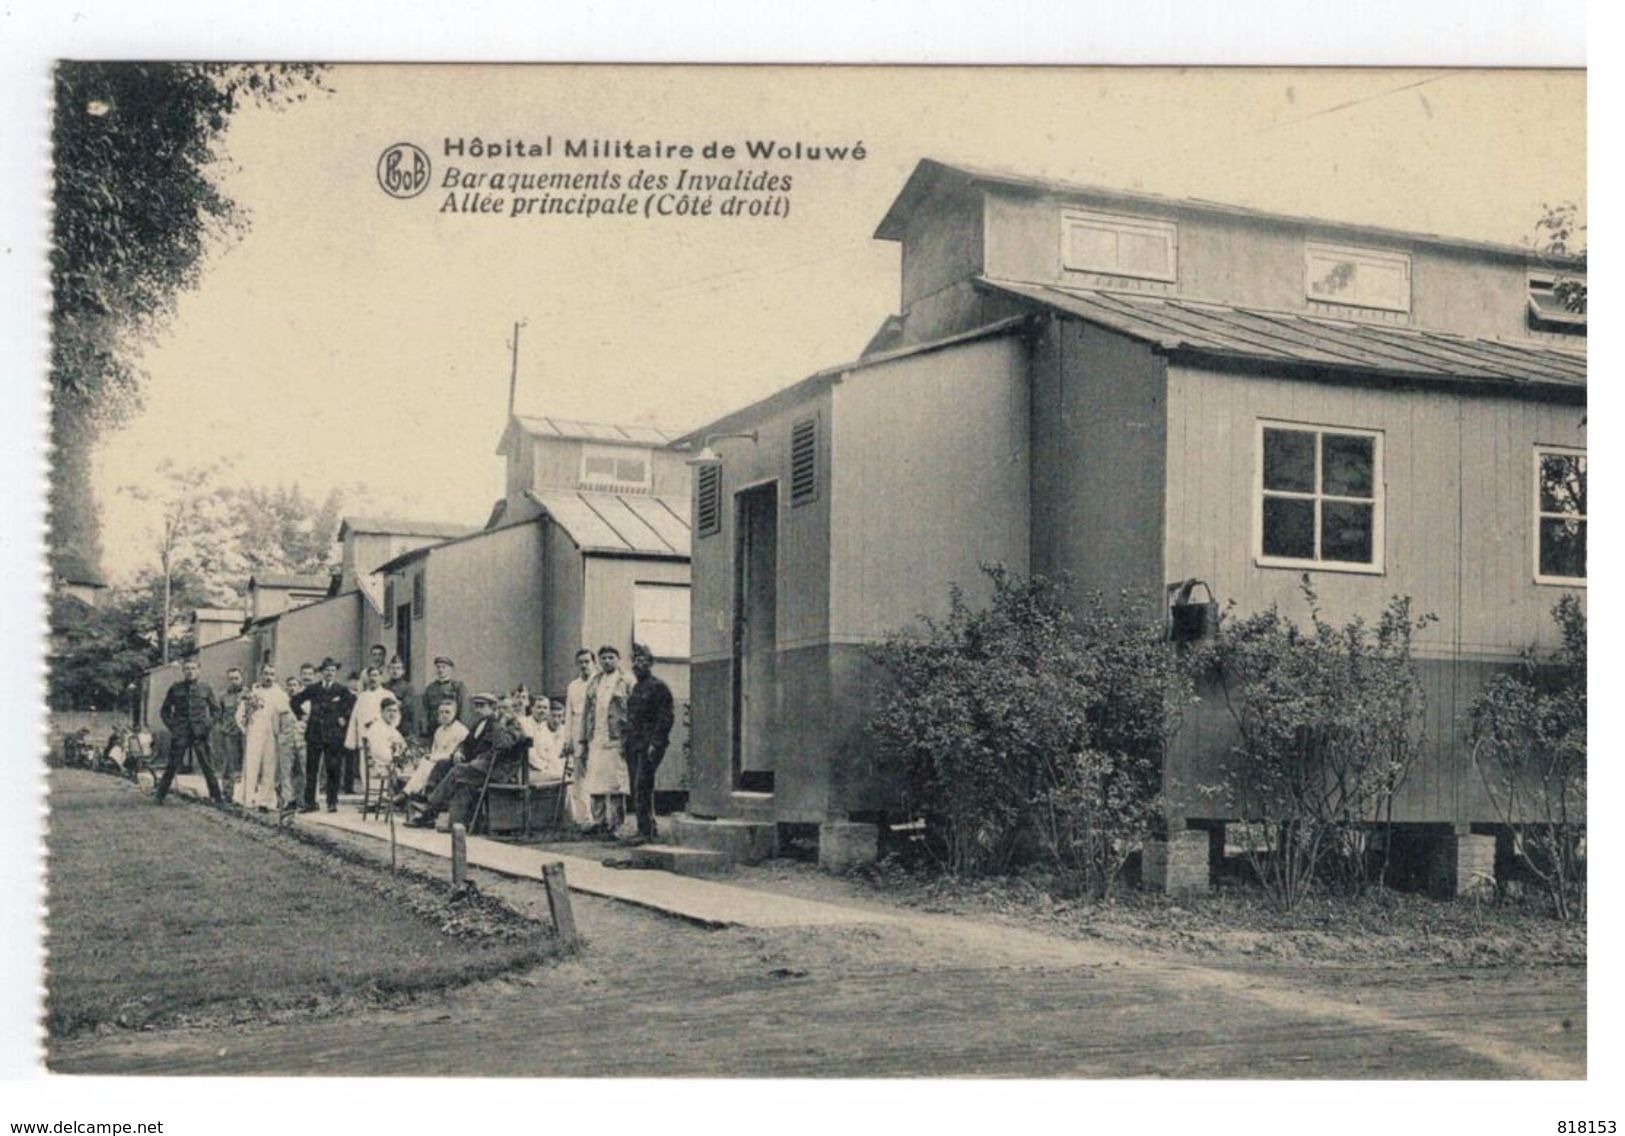 HOPITAL MILITAIRE De WOLUWE - KRYGS GASTHUIS Van WOLUWE :Baraquements Des Invalides 1920 - Woluwe-St-Pierre - St-Pieters-Woluwe